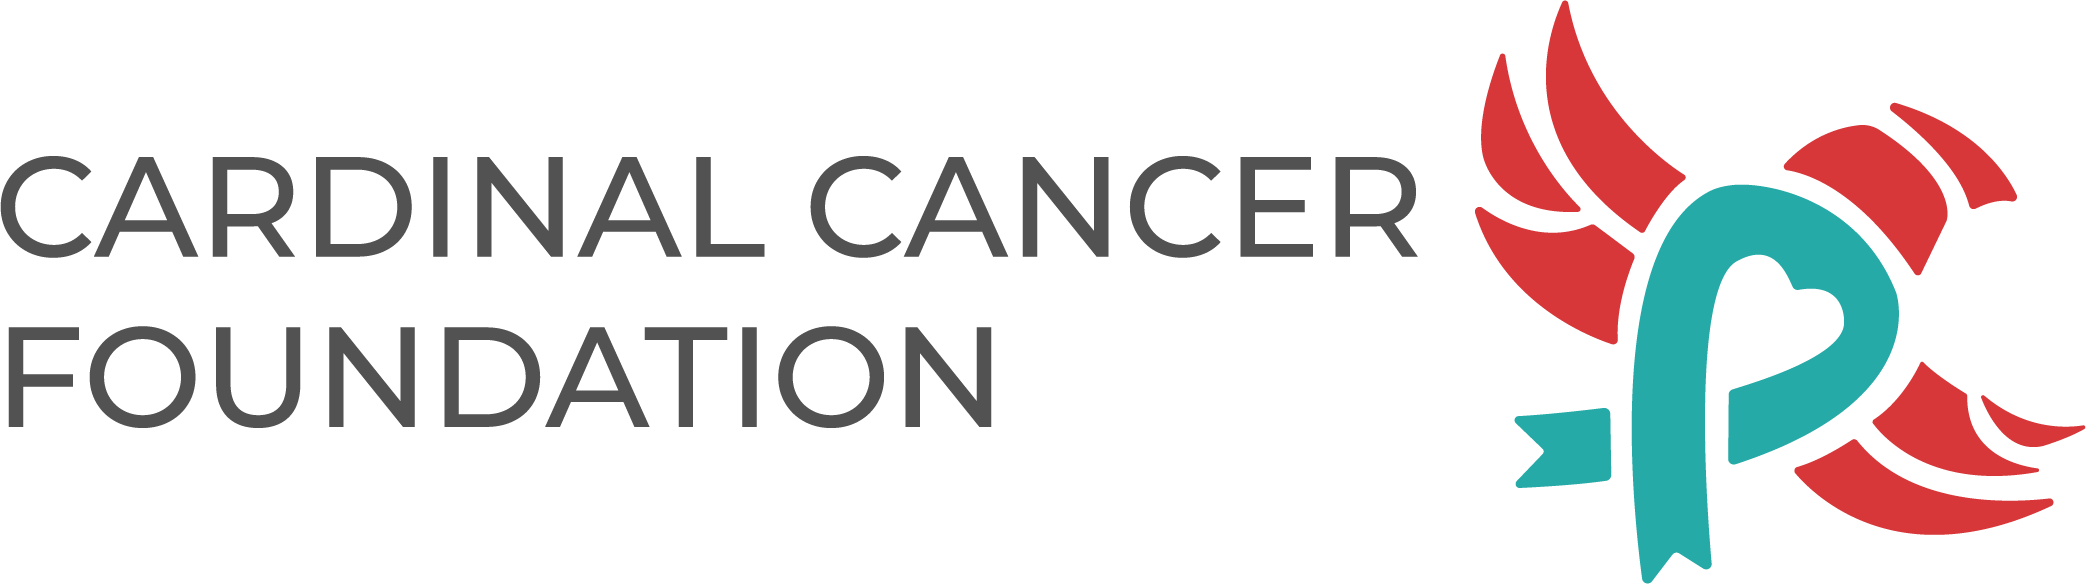 Cardinal Cancer Foundation